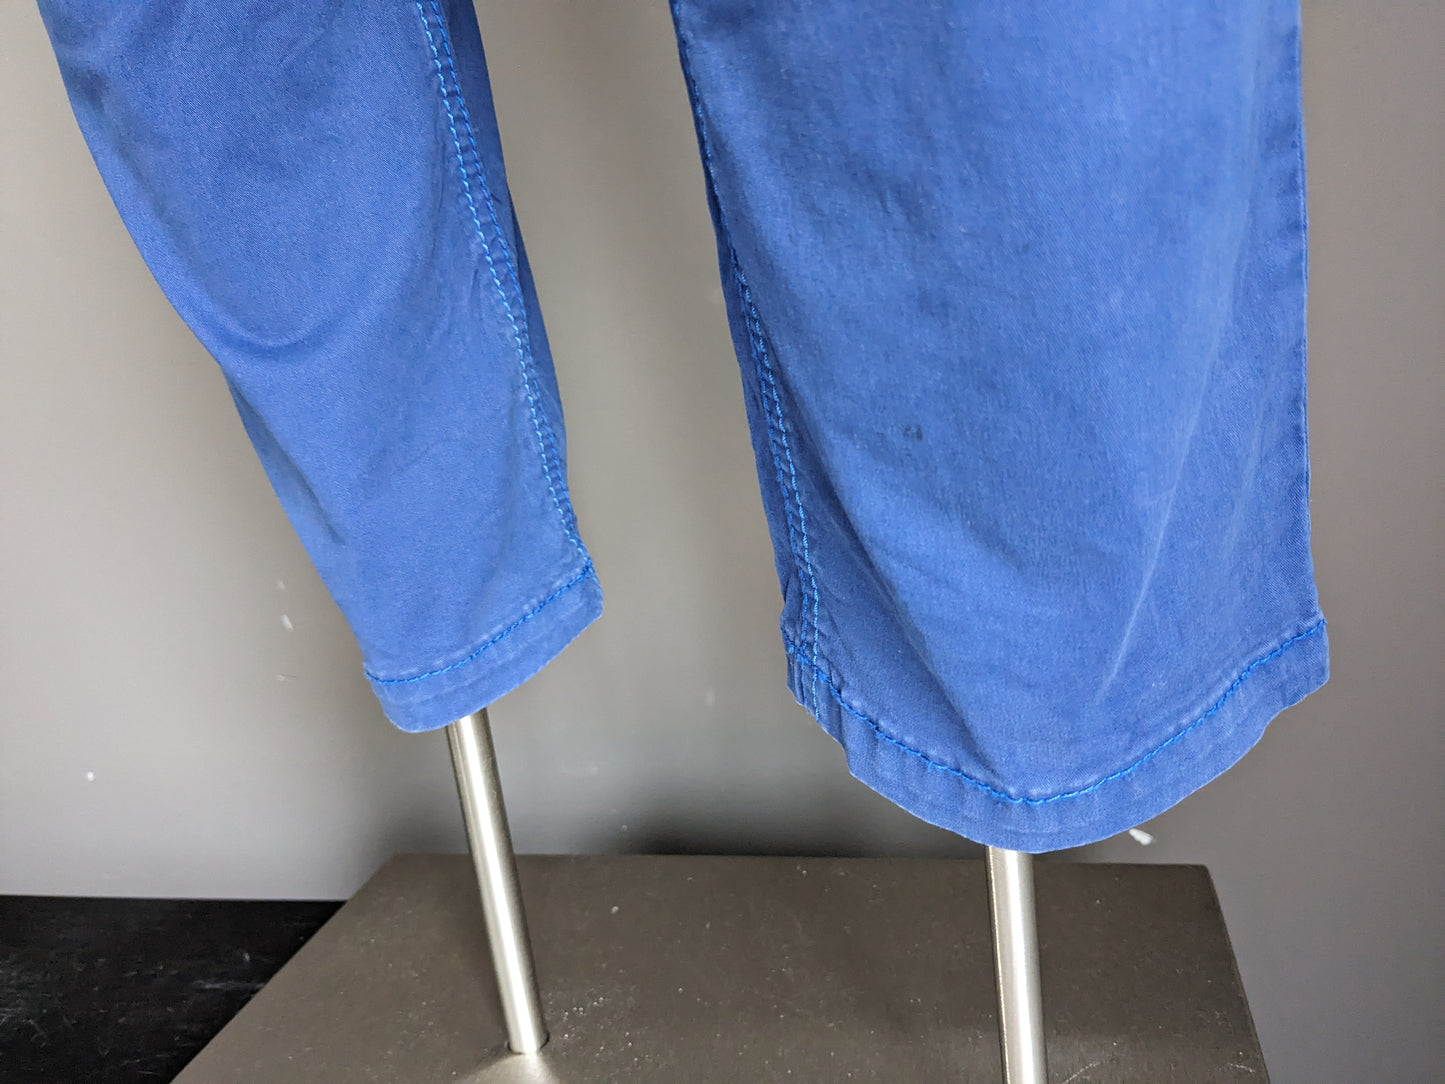 Pantaloni / pantaloni Bartlett. Blu. Dimensione 24 (48) / m